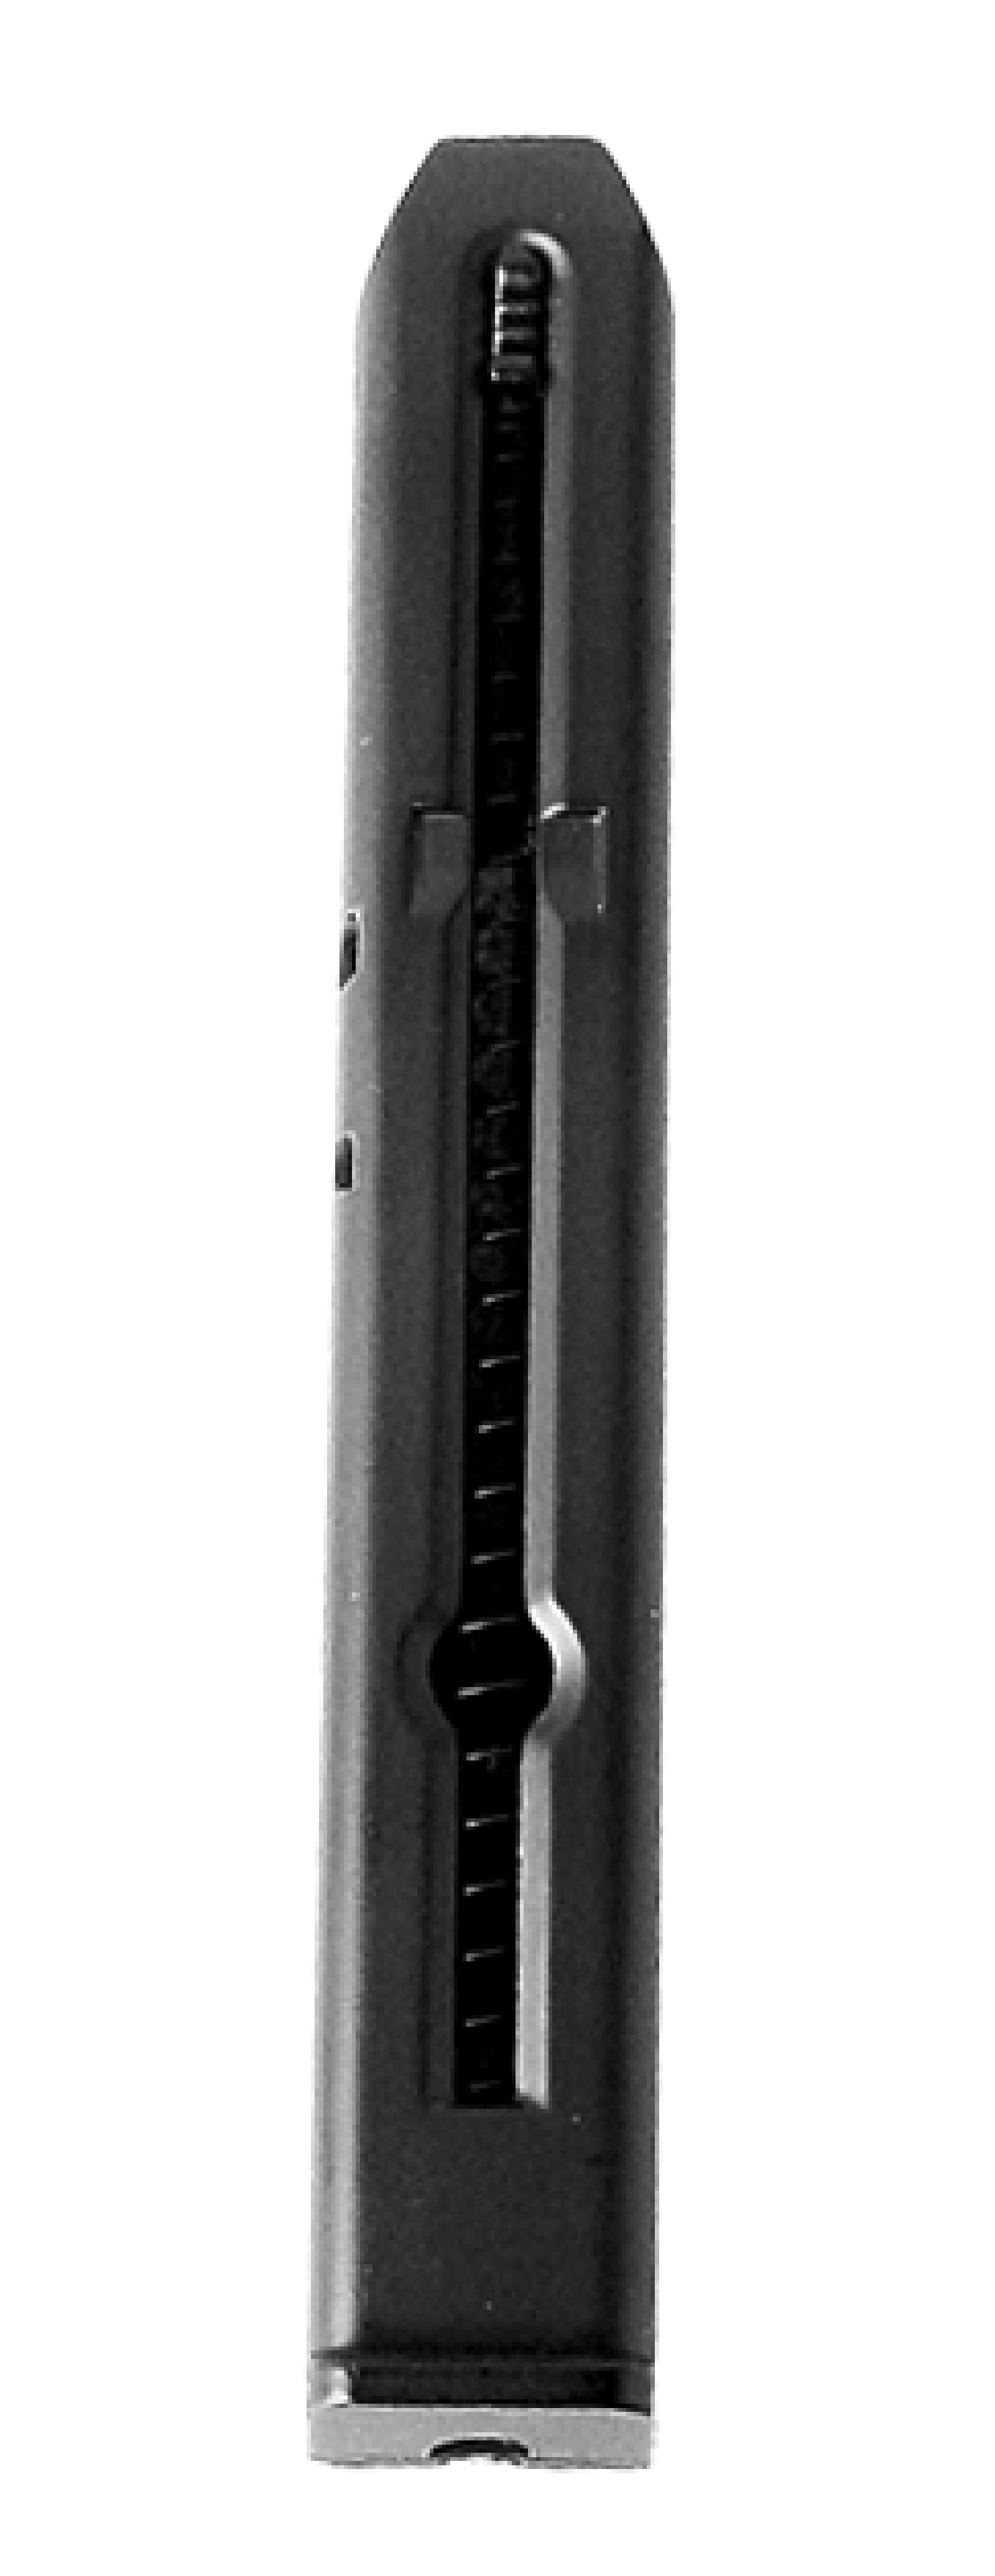 Cybergun Colt 1911 Match CO2 Magasin